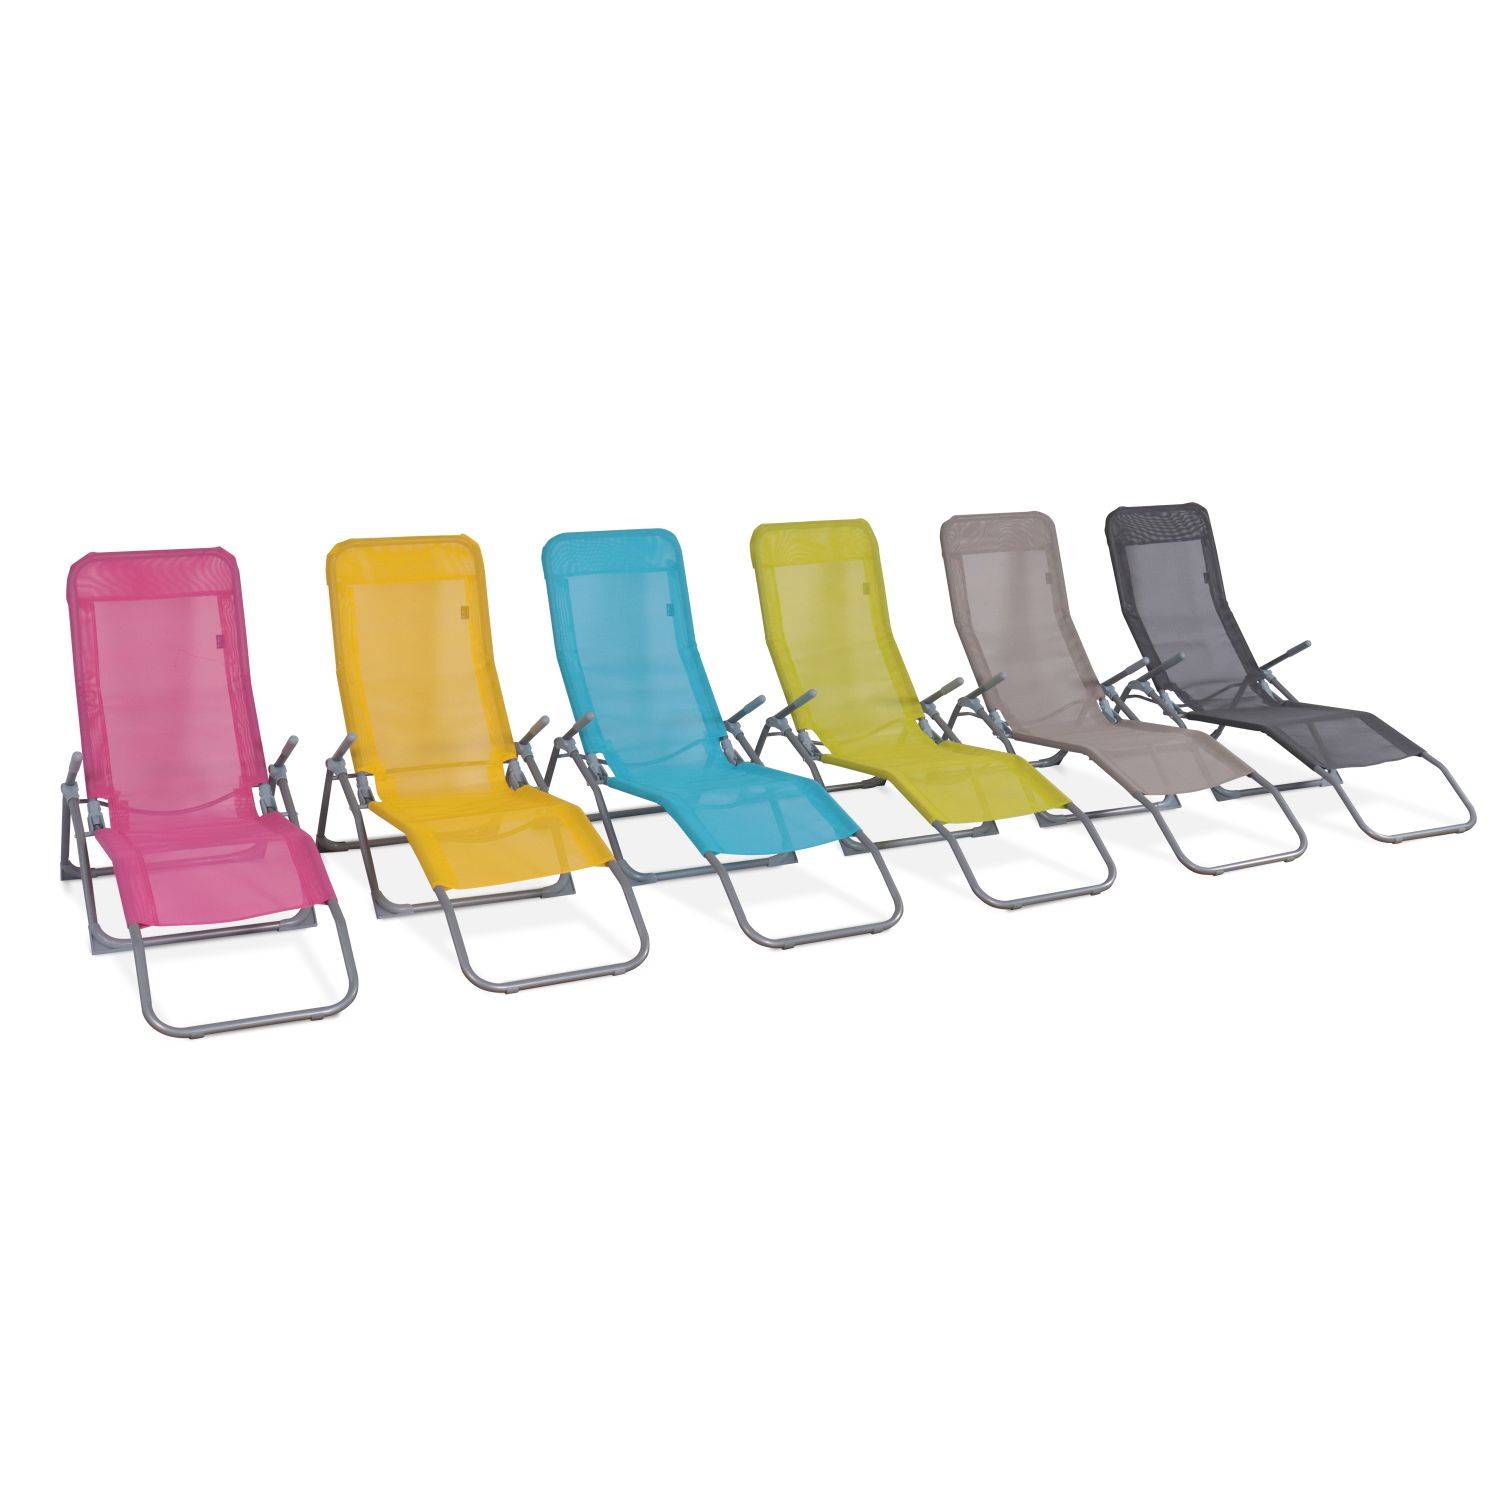 Set van 2 opvouwbare ligstoelen - Levito Roze - Ligstoelen van textileen, 2 posities, opvouwbare ligstoelen Photo6